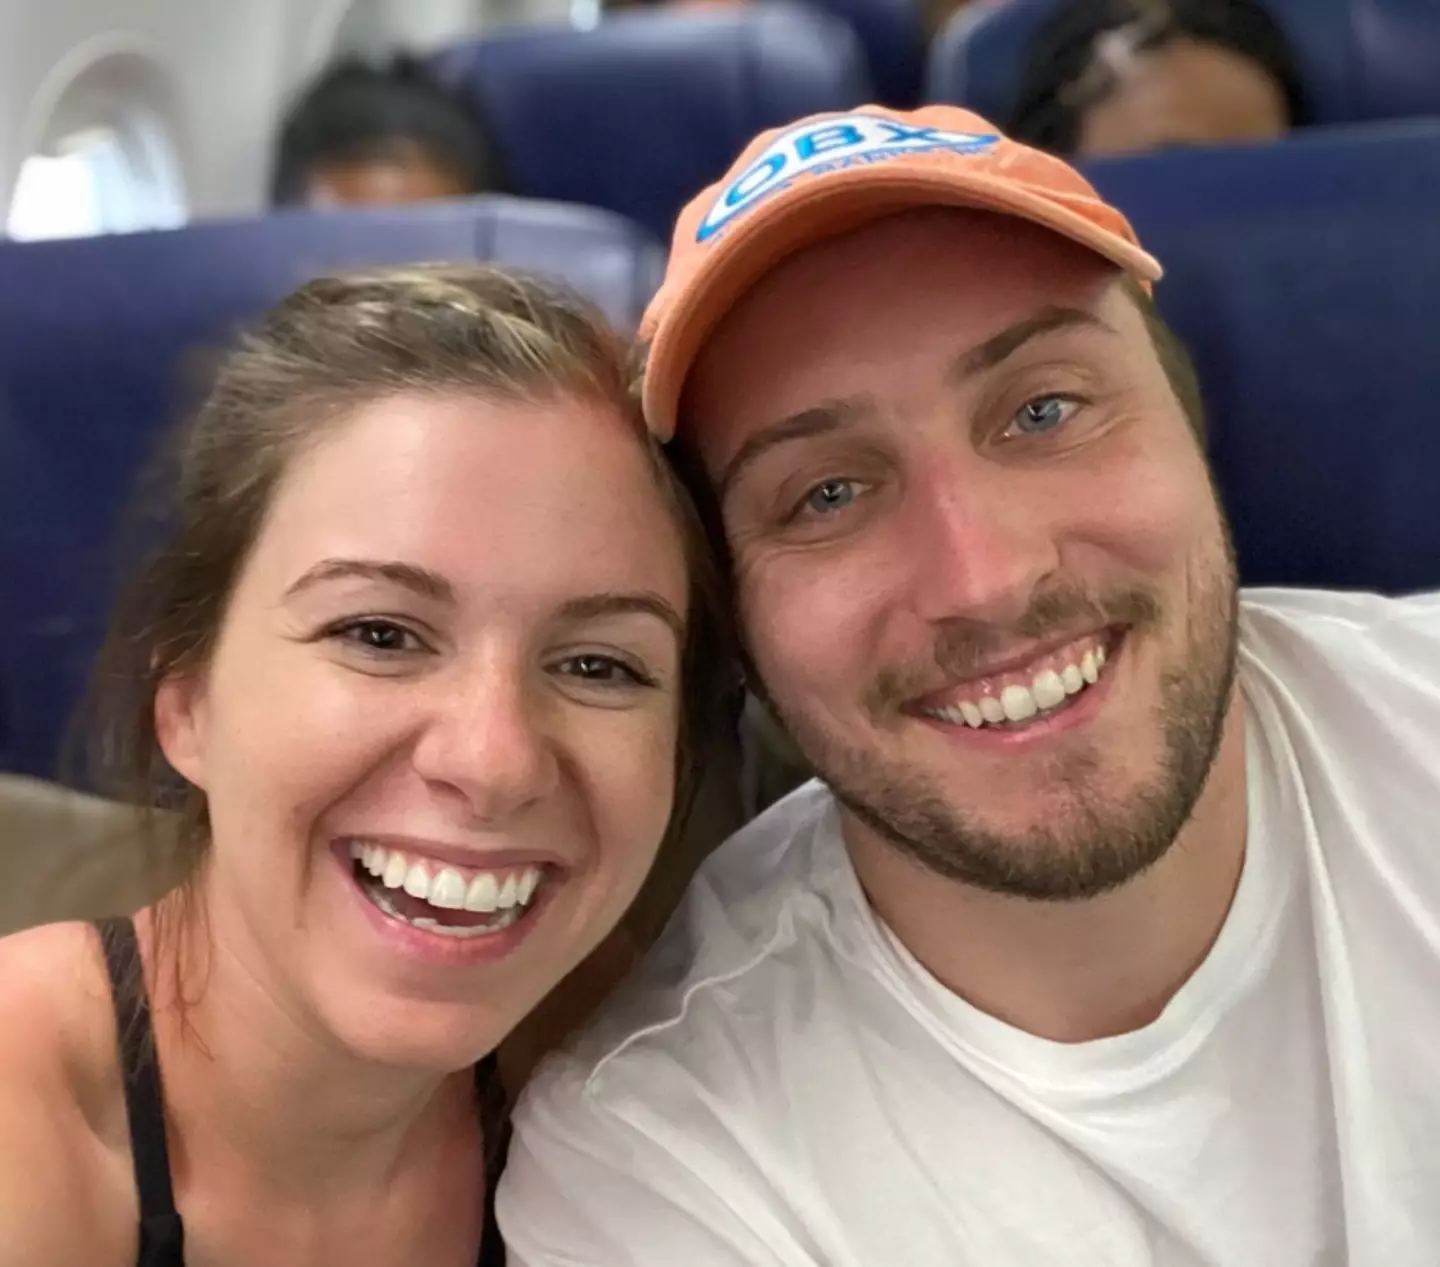 Daniel Shifflett and Emily Raines leapt into action when a man fell unconscious on their flight.